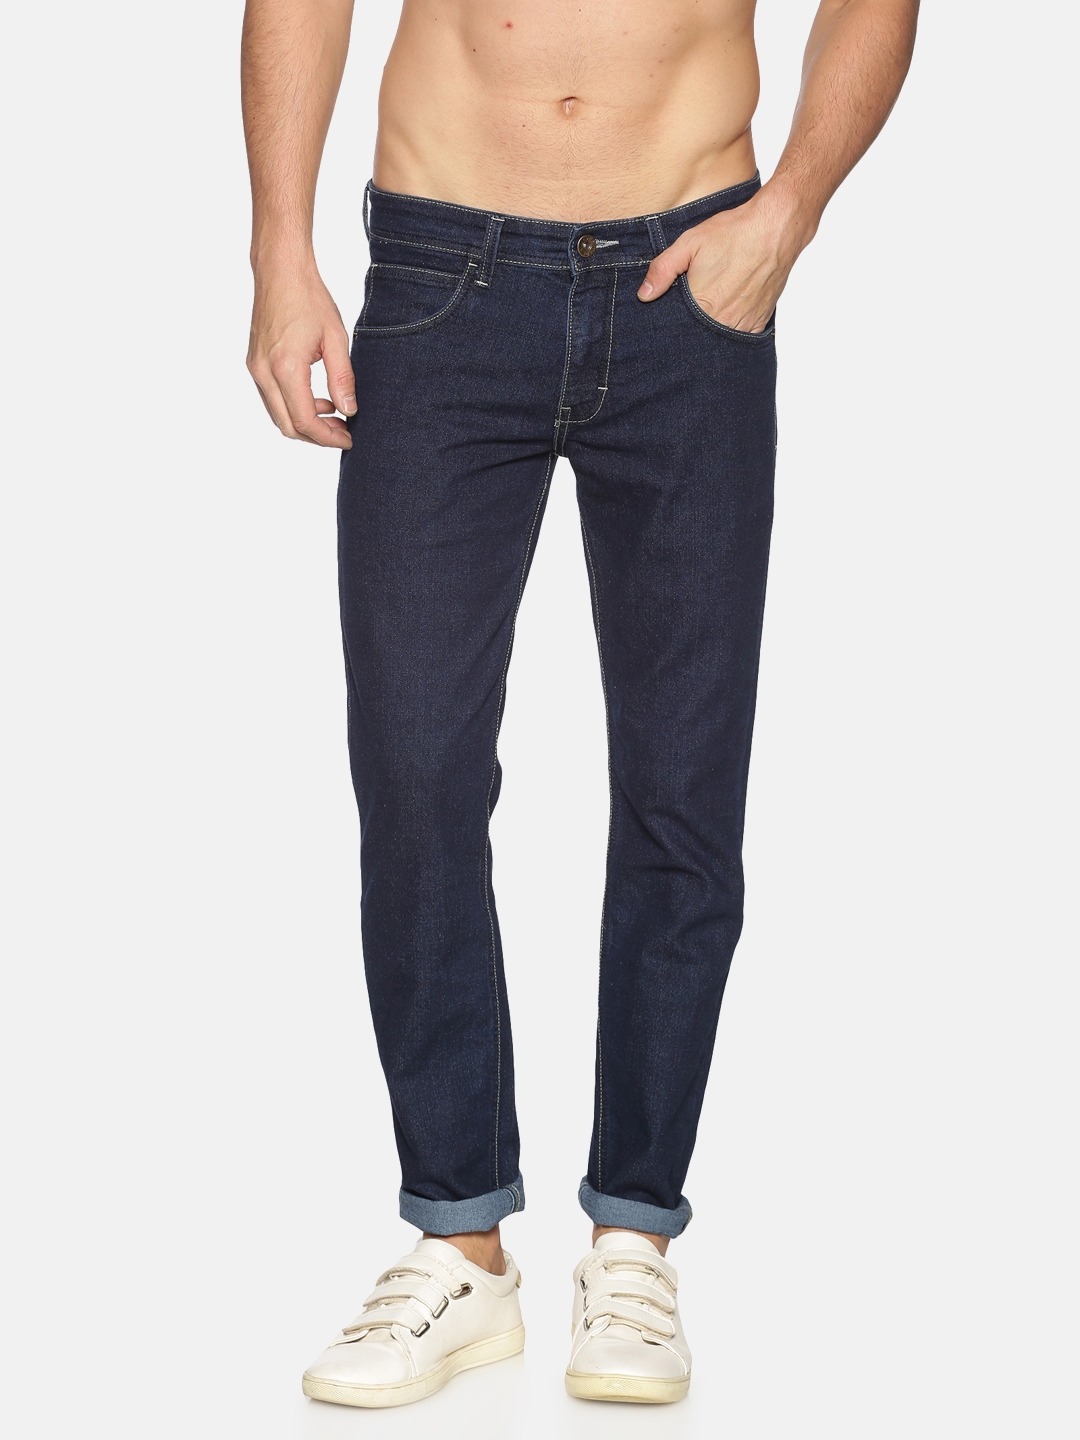 Chennis | Chennis Mens Cotton Slim Fit Casual Indigo Jeans